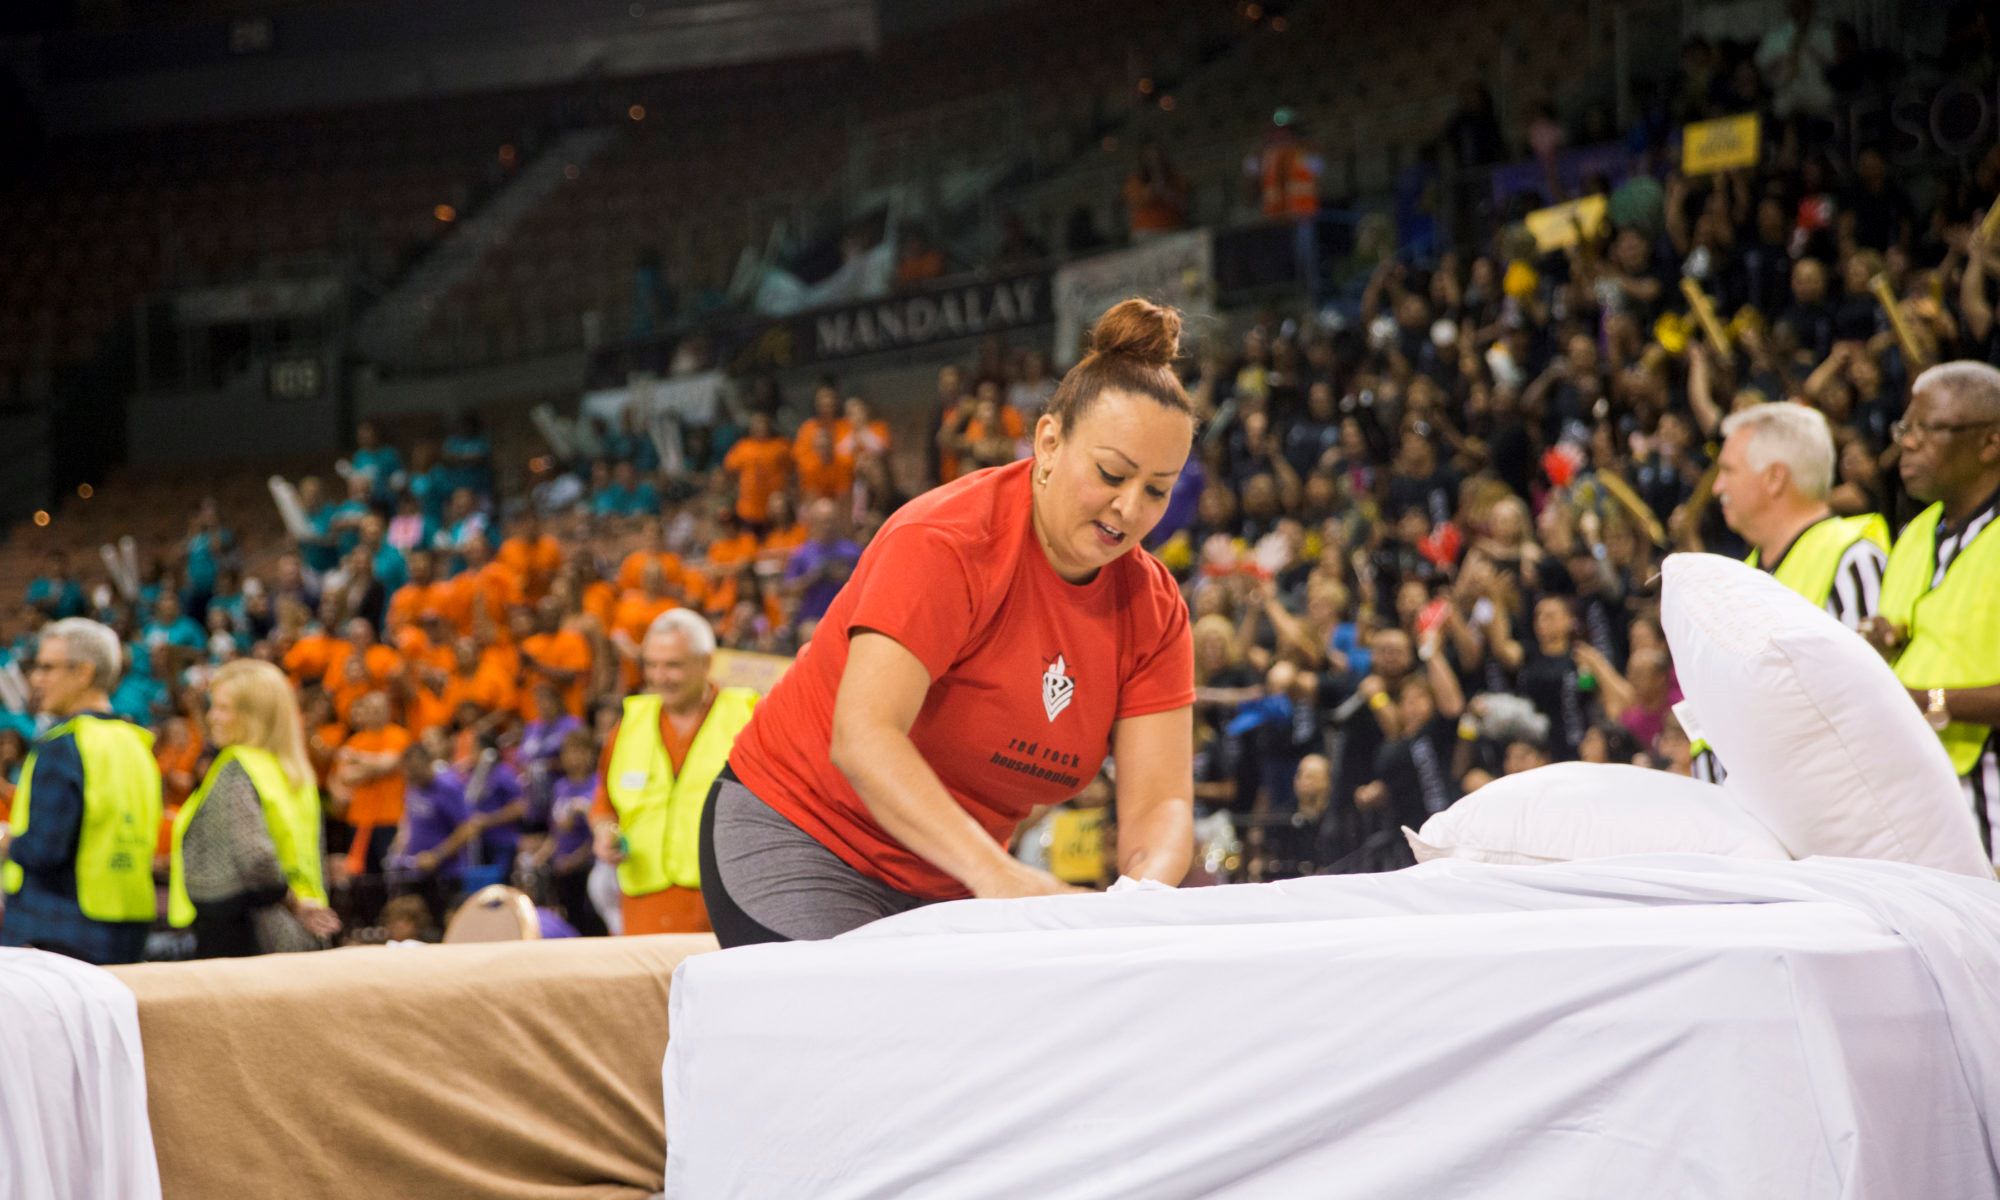 Vegas Hospitality Workers Showcase Skills At Housekeeping Olympics